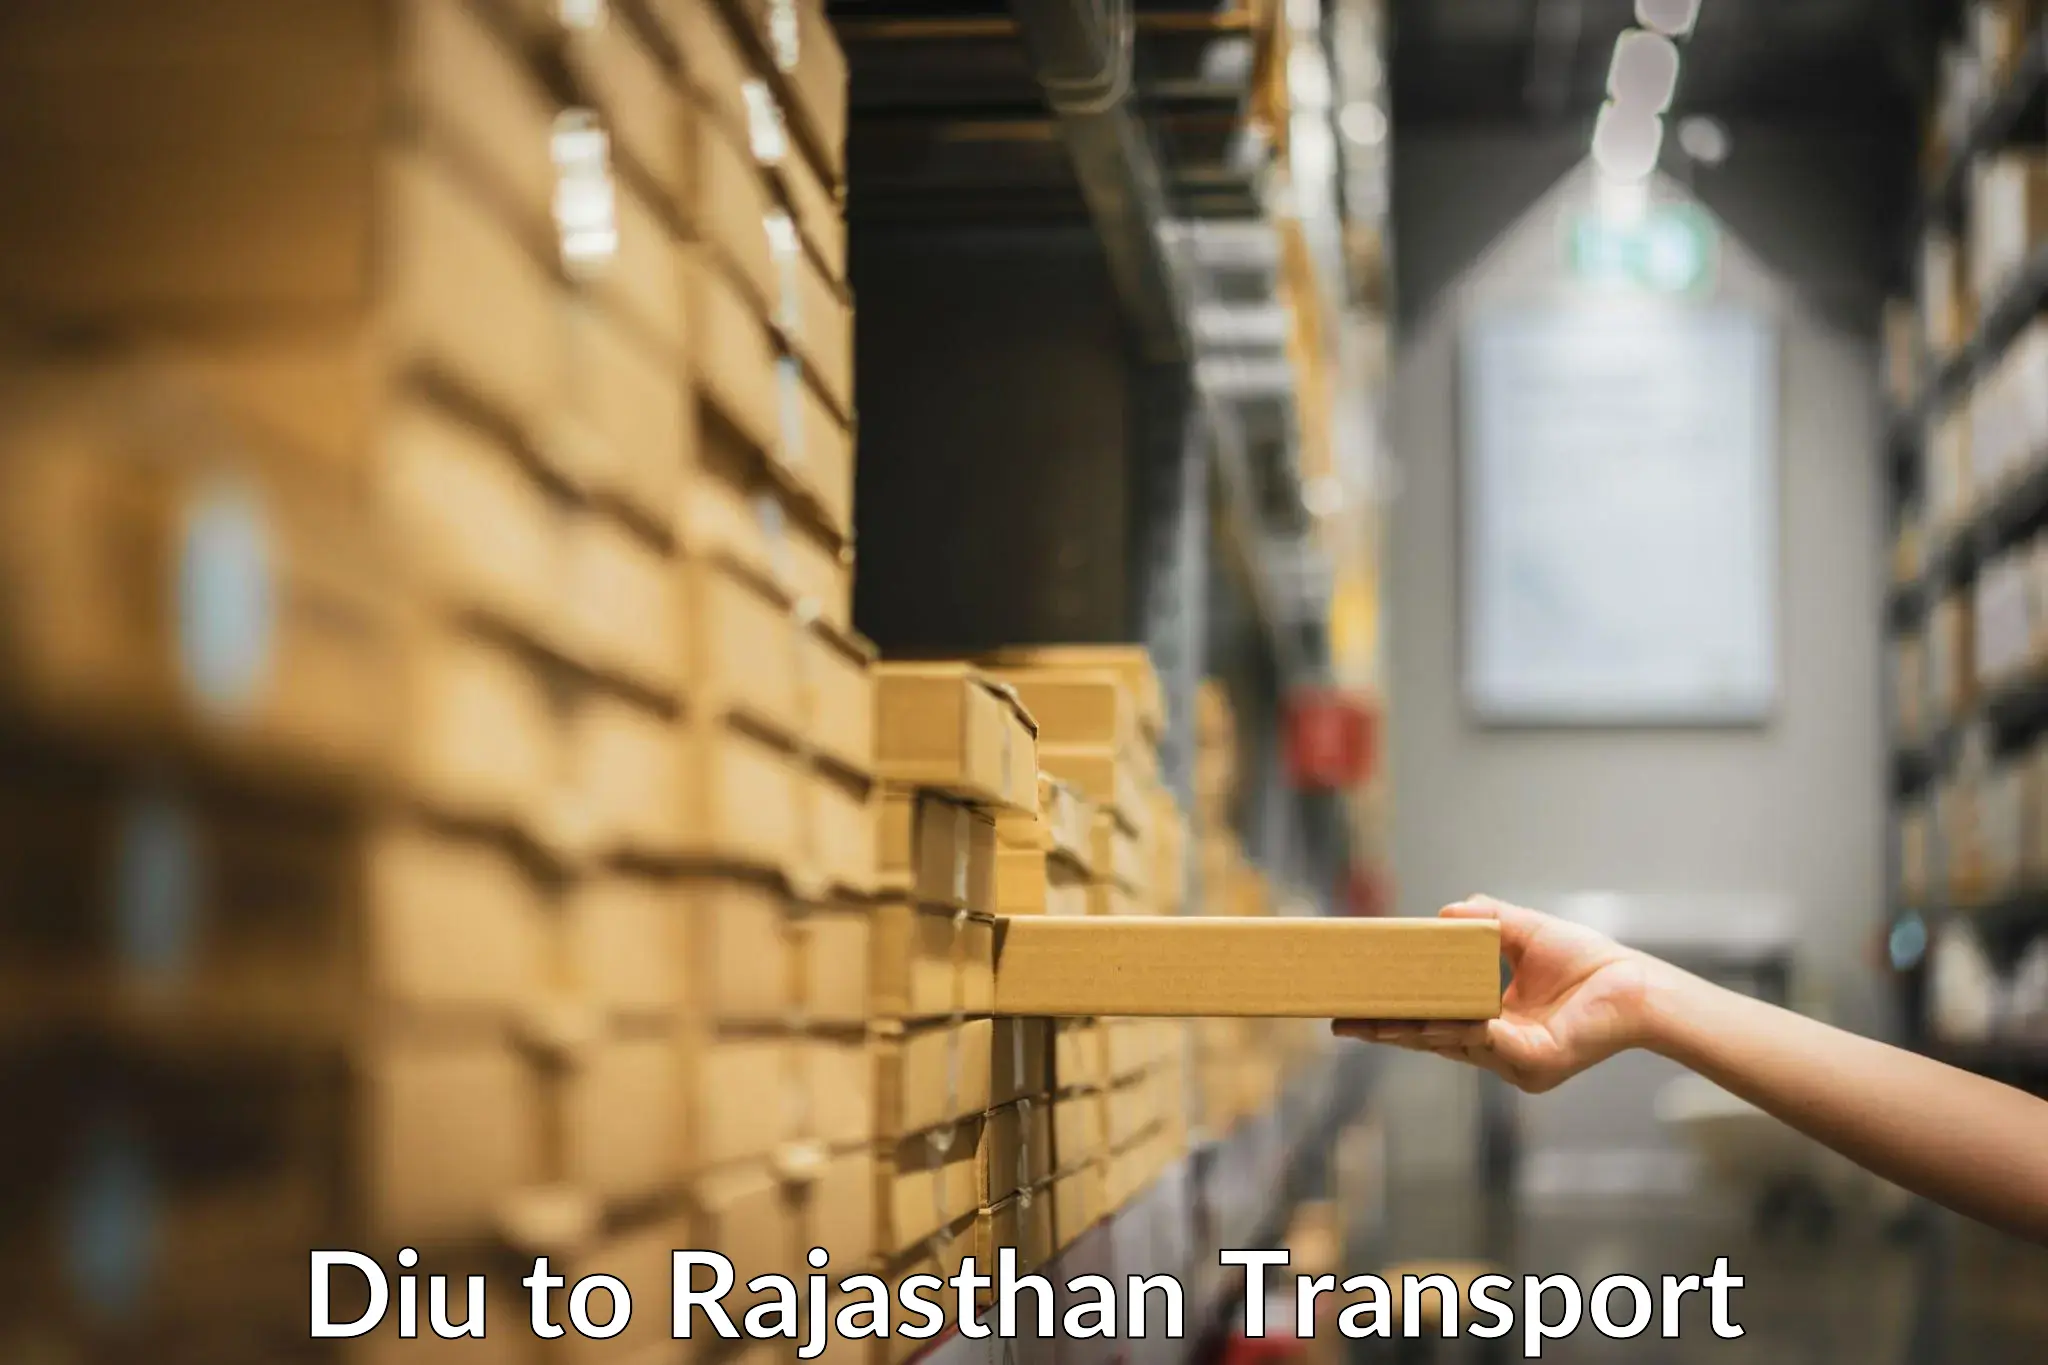 Cycle transportation service Diu to Rajasthan